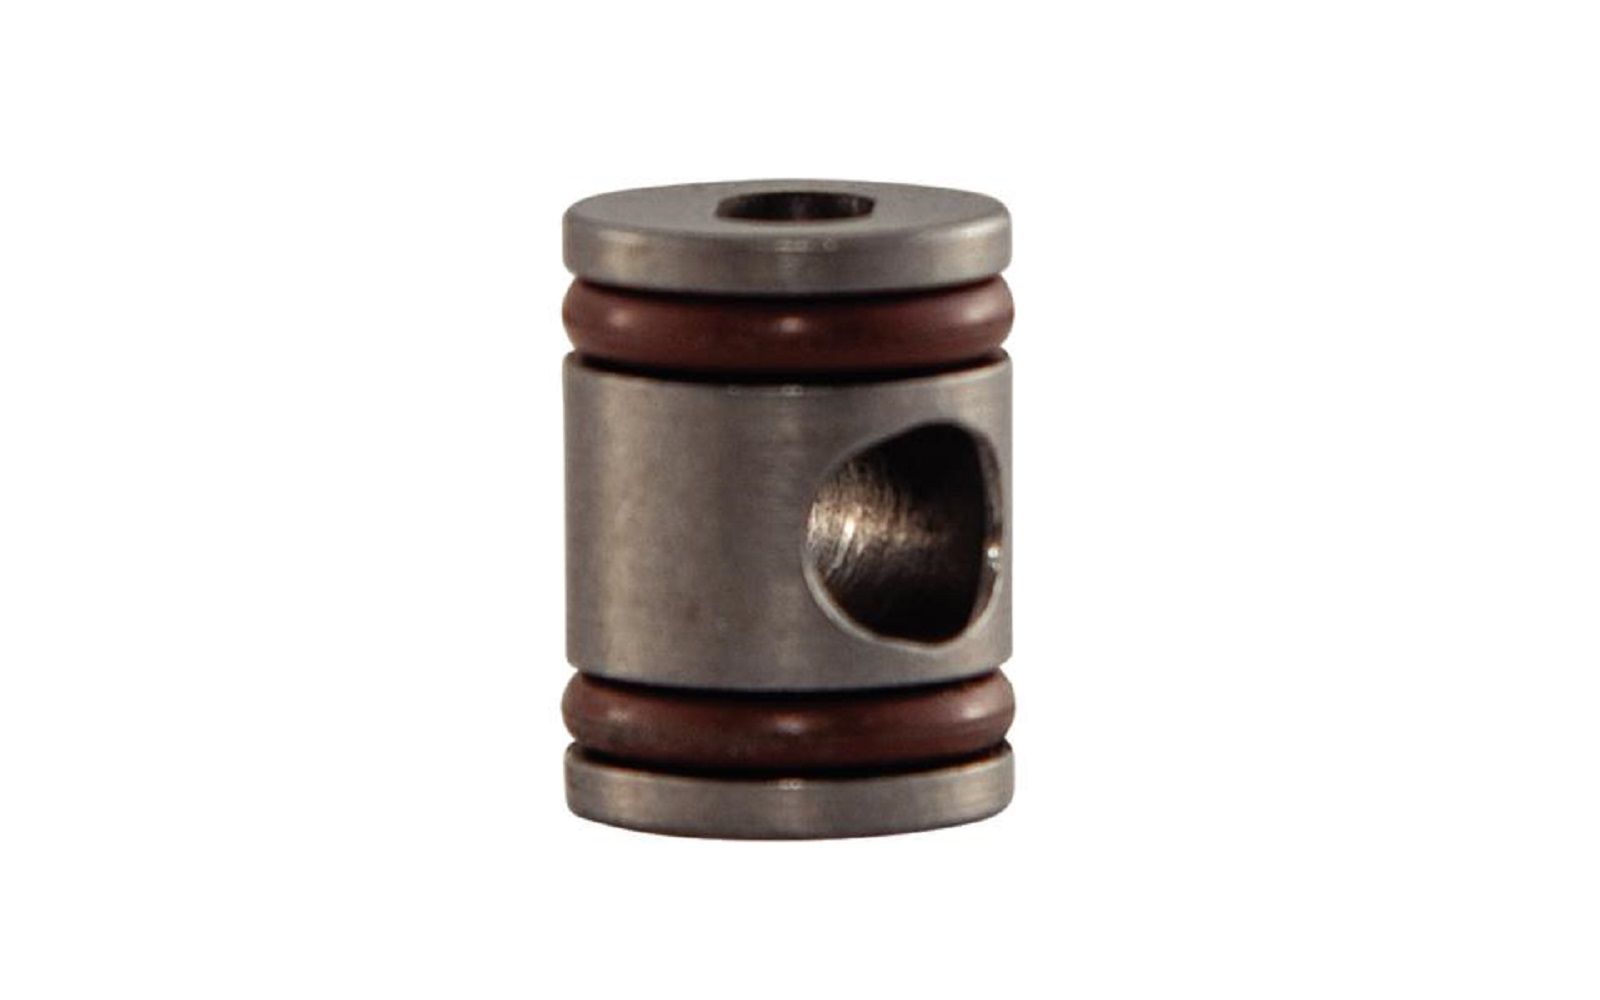 Bull frog valve spool for saliva ejectors – 1/pkg